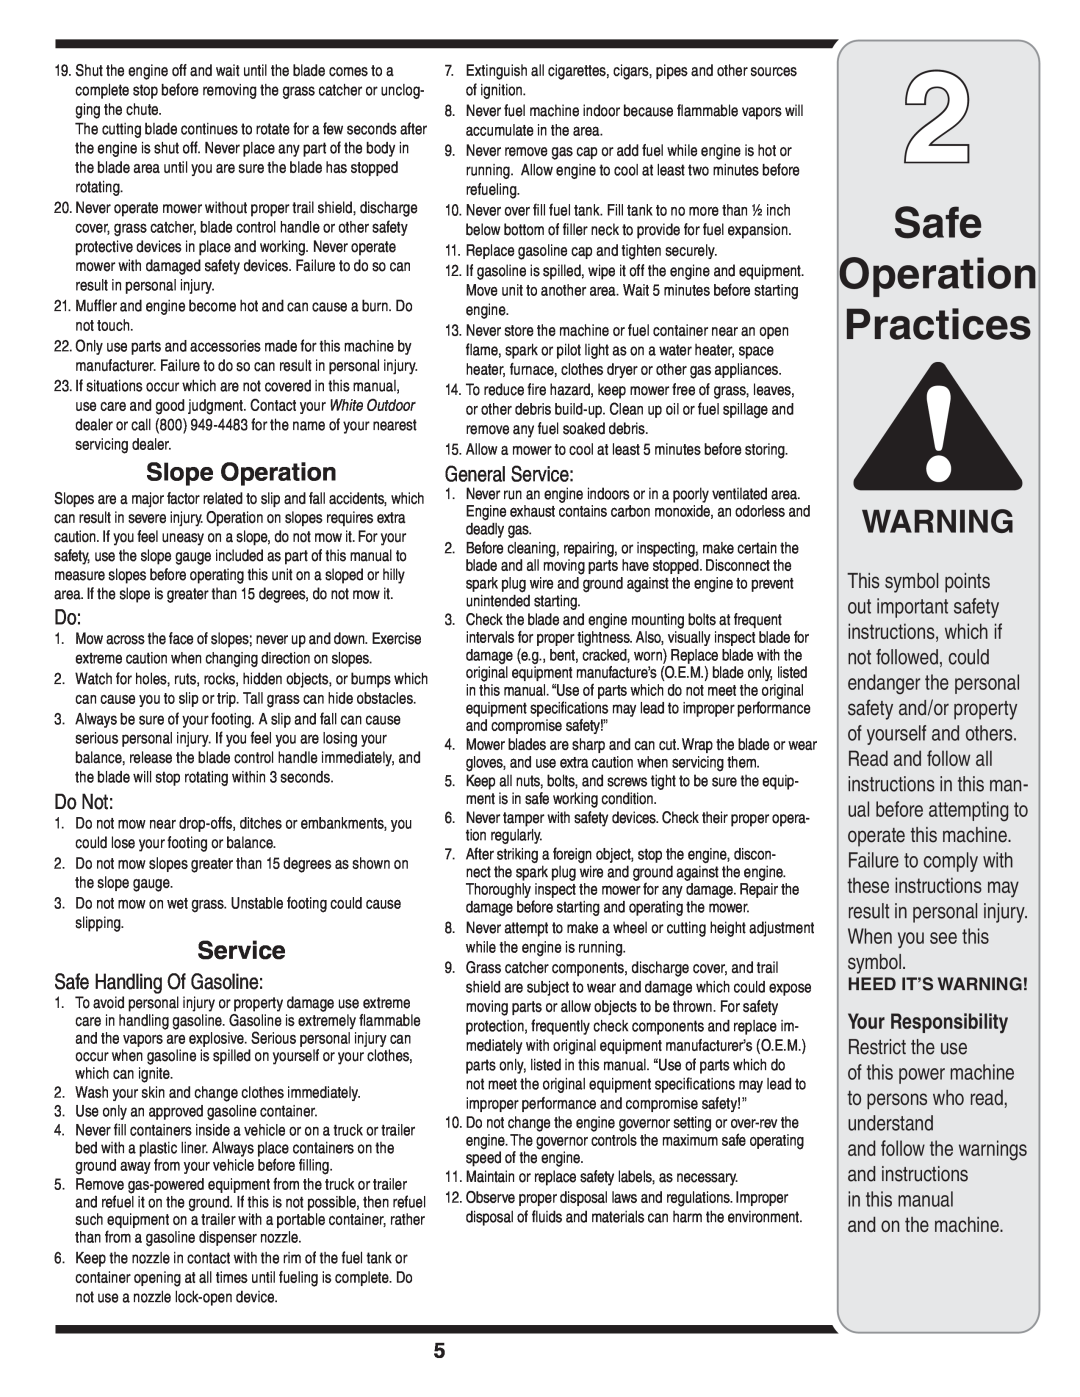 White Outdoor 105 Safe Operation Practices, Slope Operation, Do Not, Safe Handling Of Gasoline, General Service 